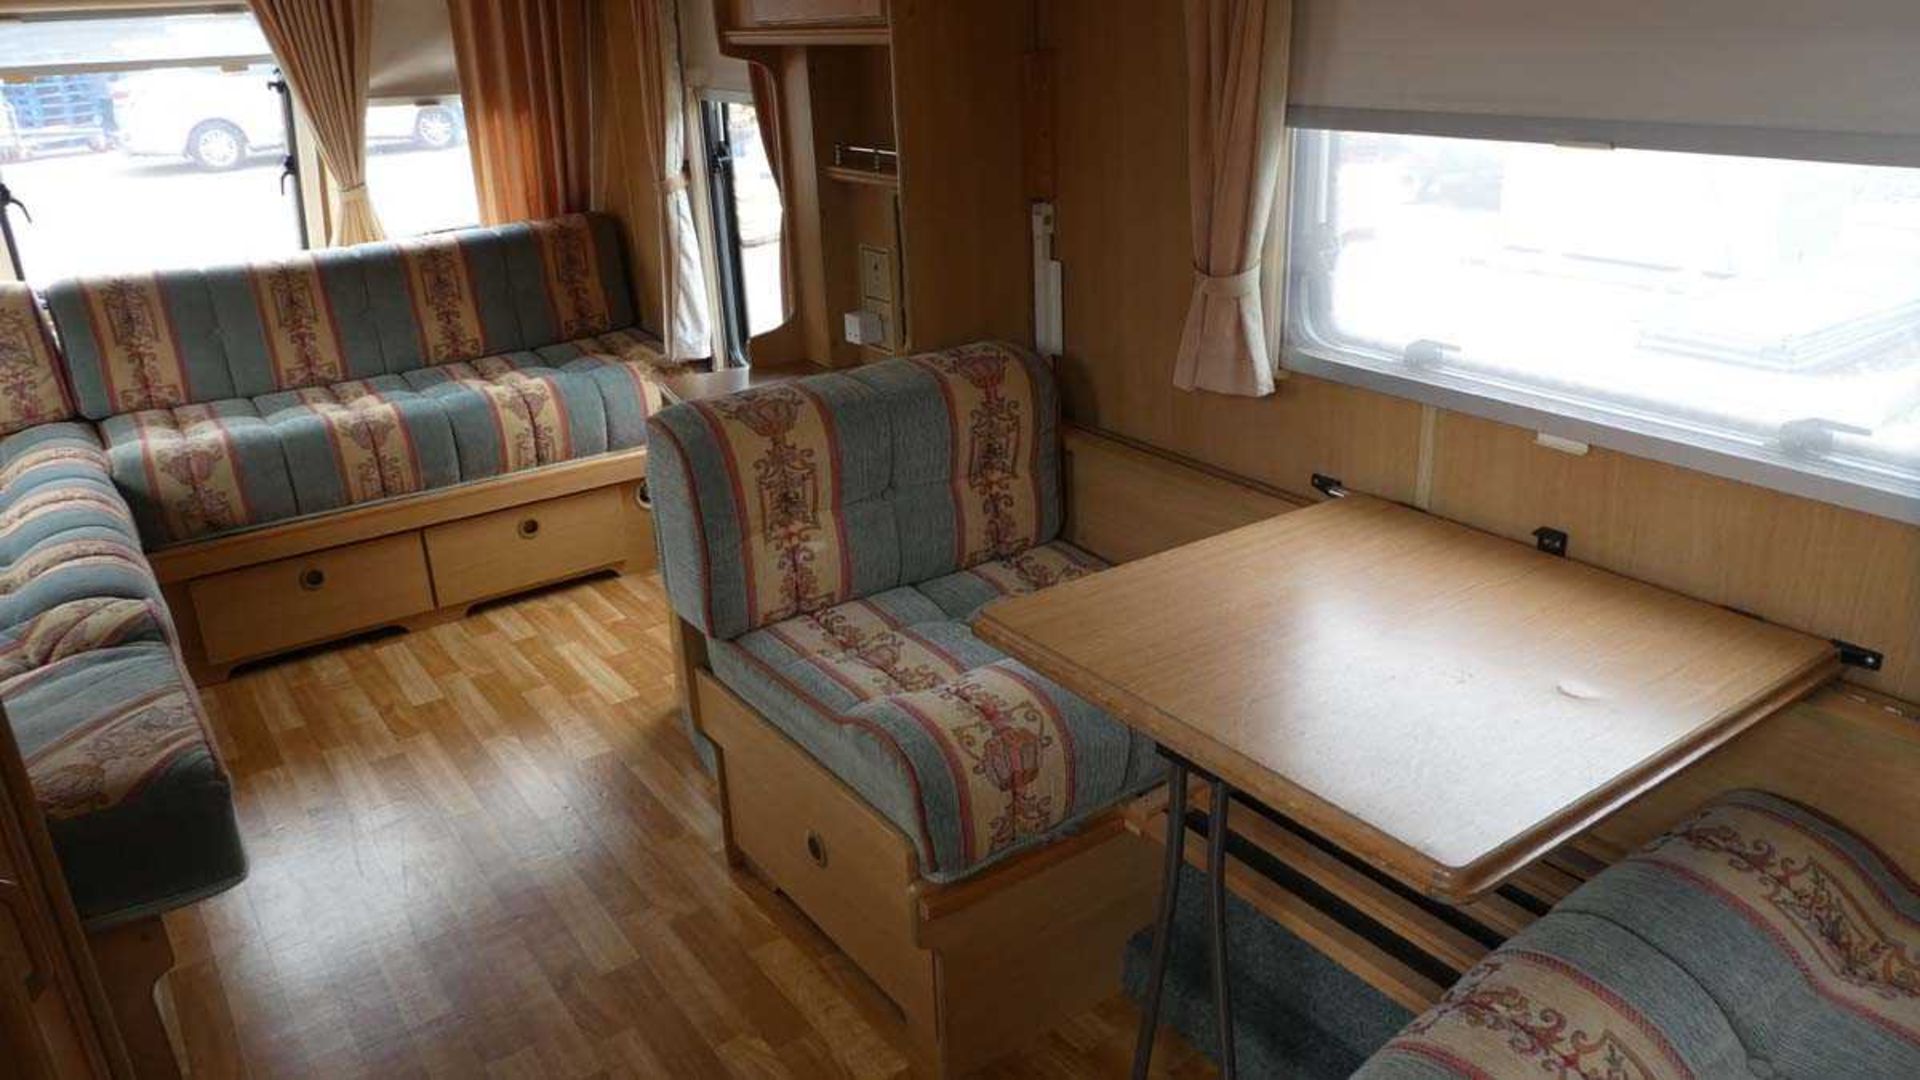 Abi Award Morningstar 18ft touring caravan, 4-5 berth with cooker, refrigerator, WC, shower, - Image 12 of 12